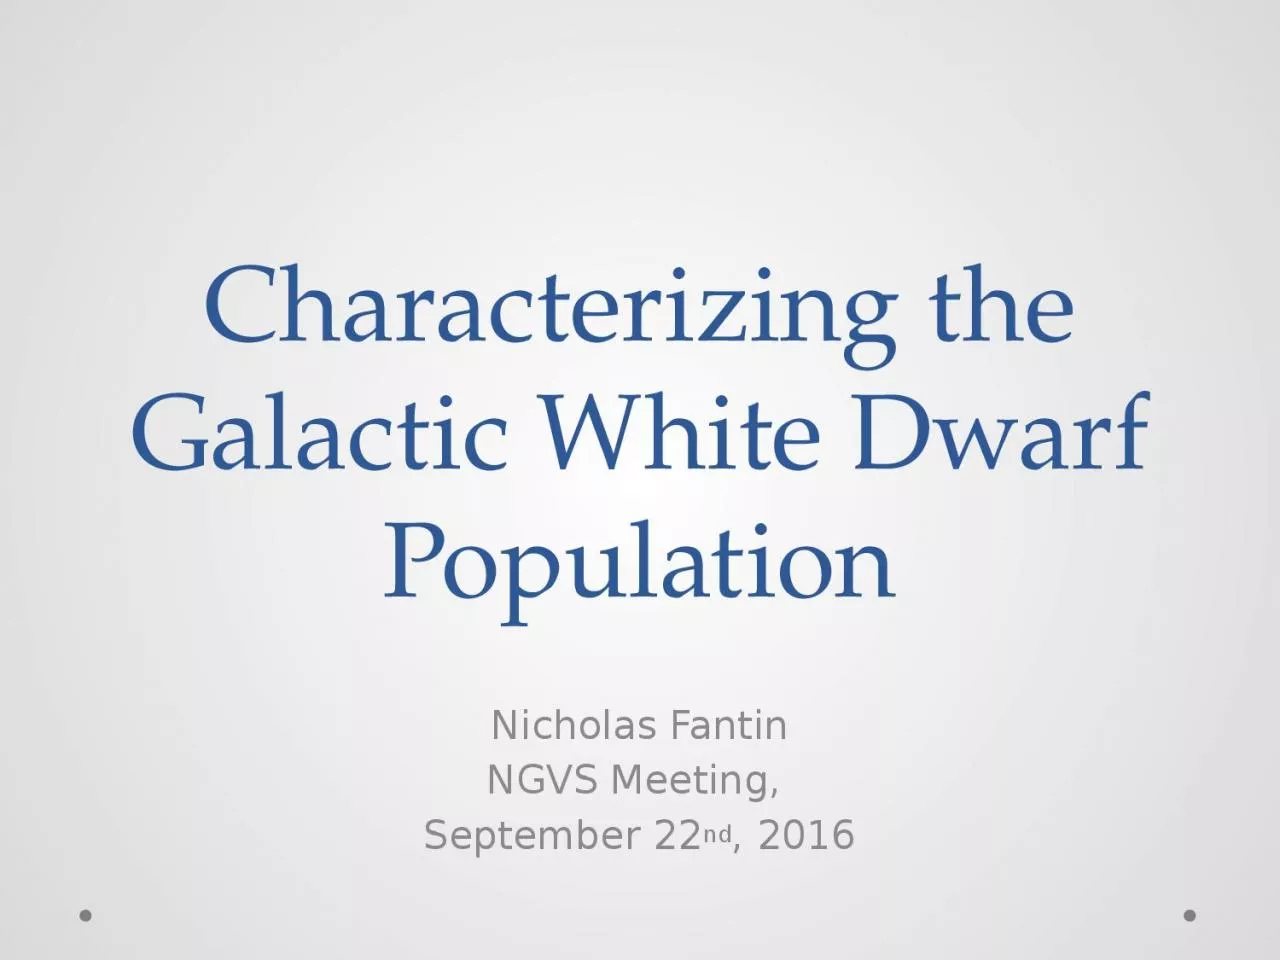 Characterizing the Galactic White Dwarf Population